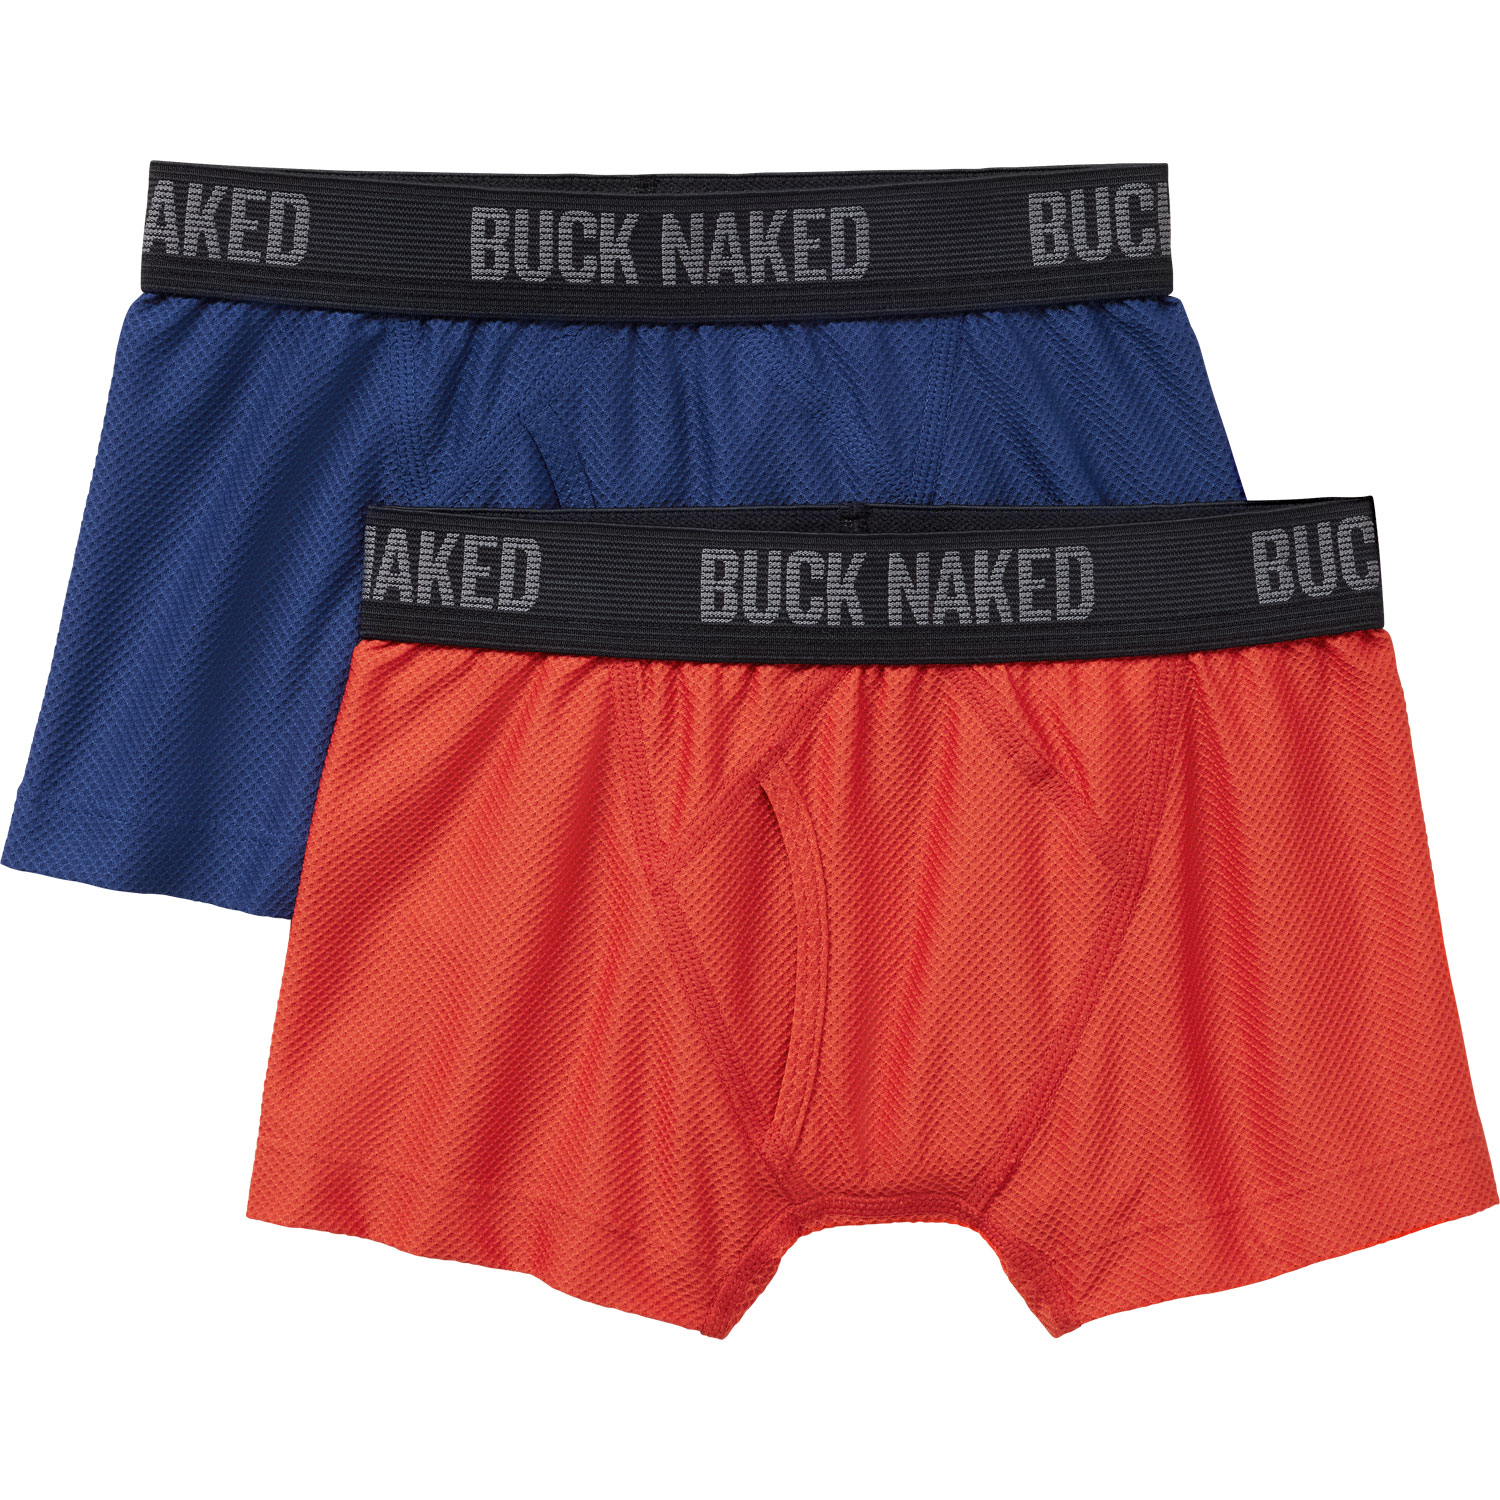 Women's Go Buck Naked Boyshort Underwear